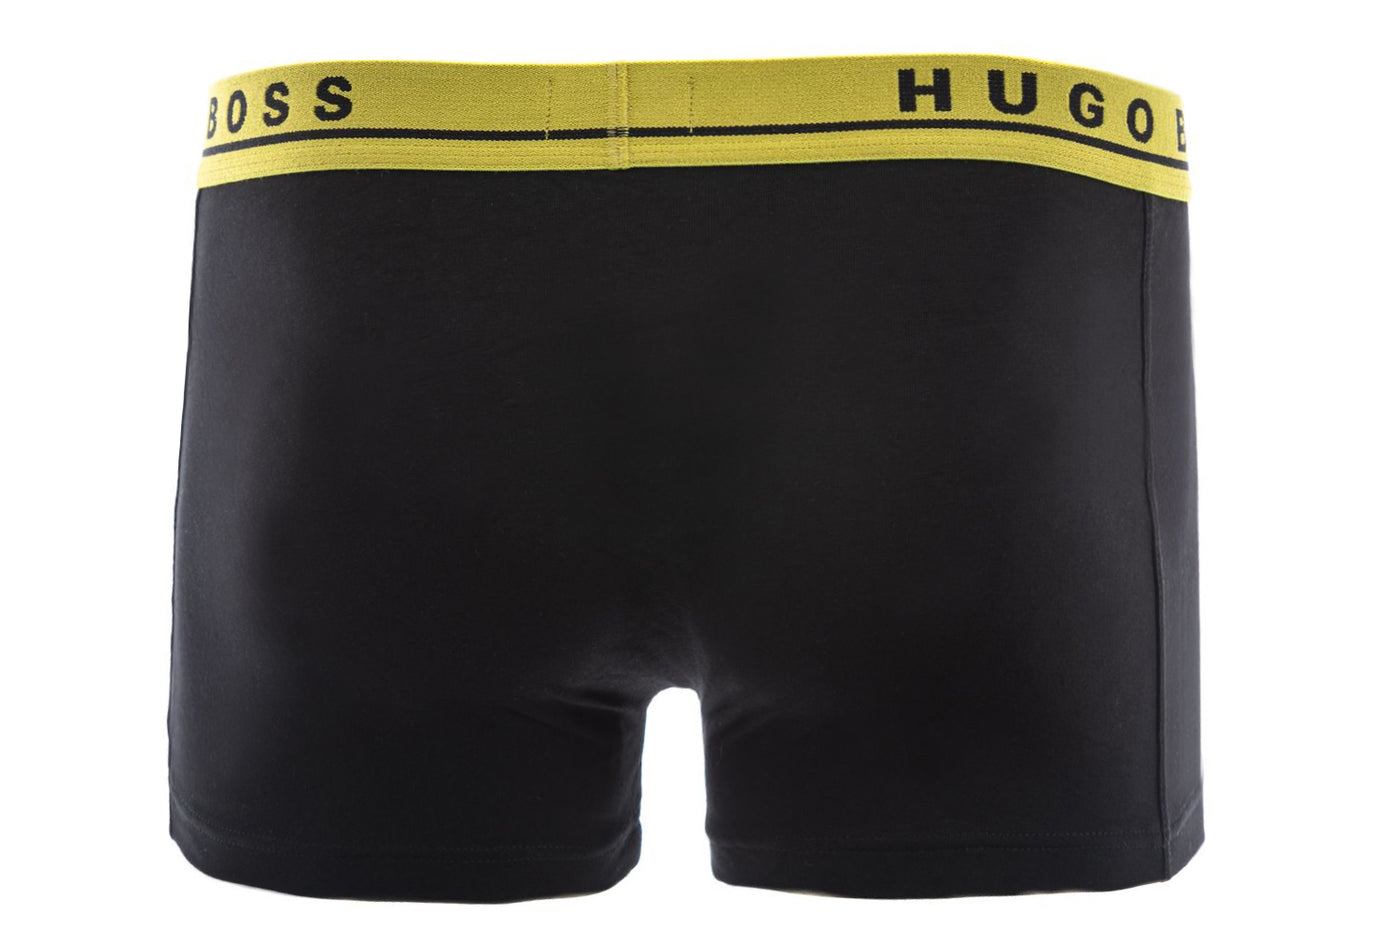 BOSS Trunk 3 Pack Underwear in Navy, Burgundy & Yellow